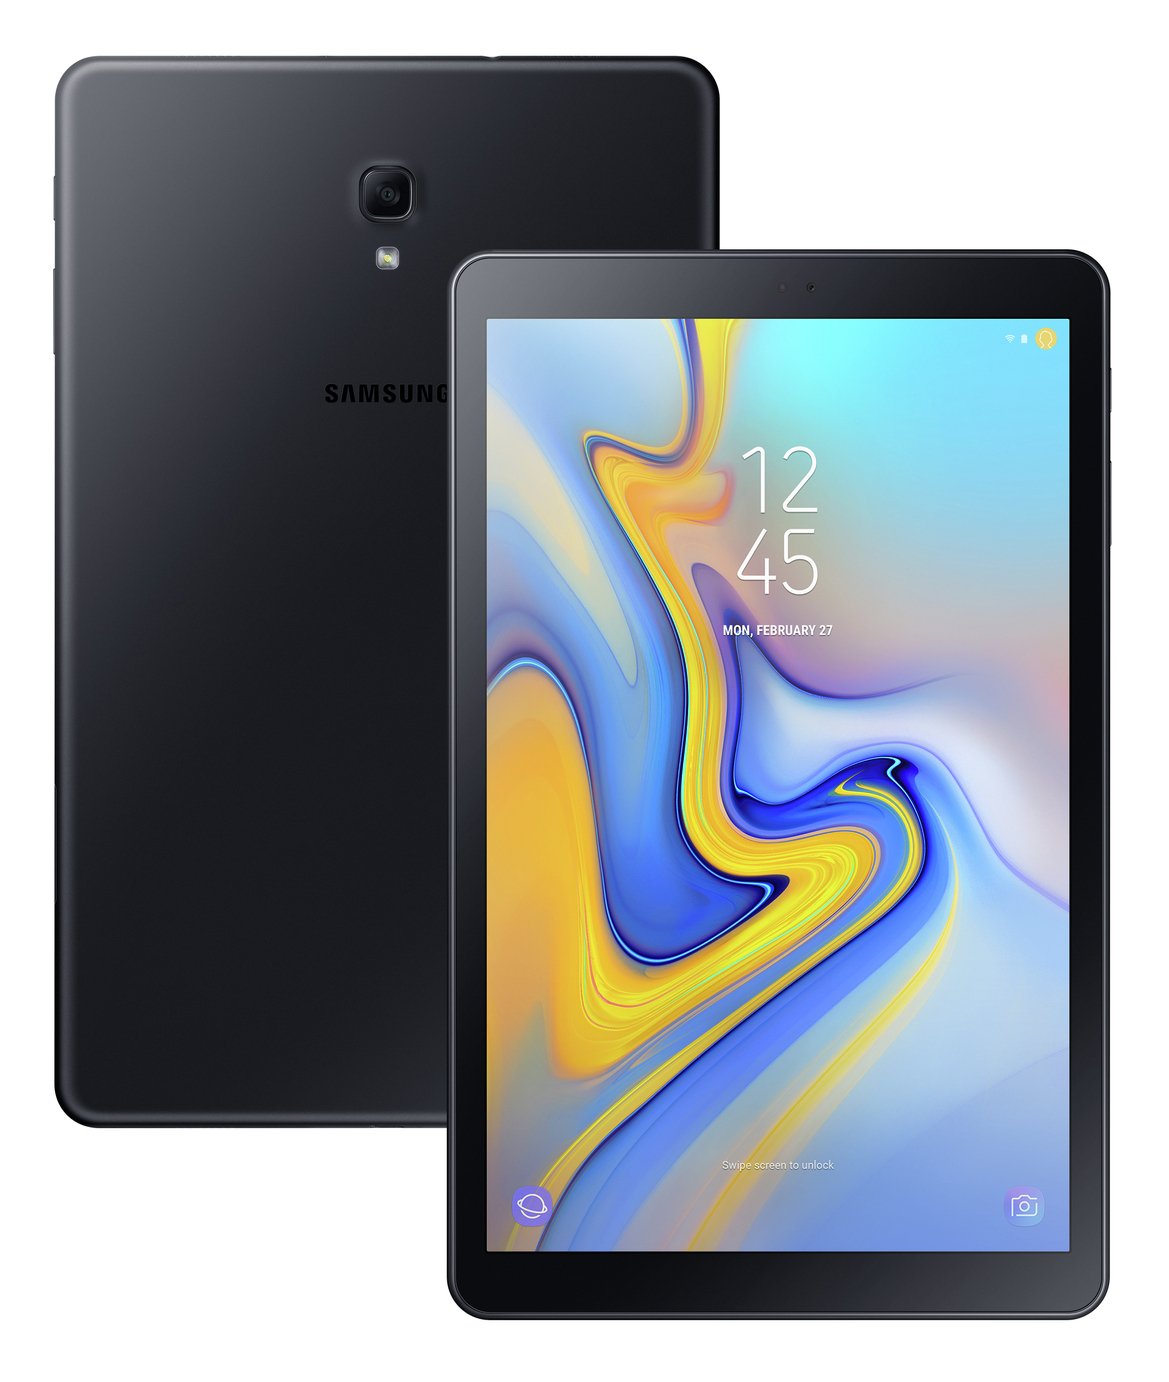 Samsung Galaxy Tab A 10.5 Inch 32GB LTE Tablet Reviews